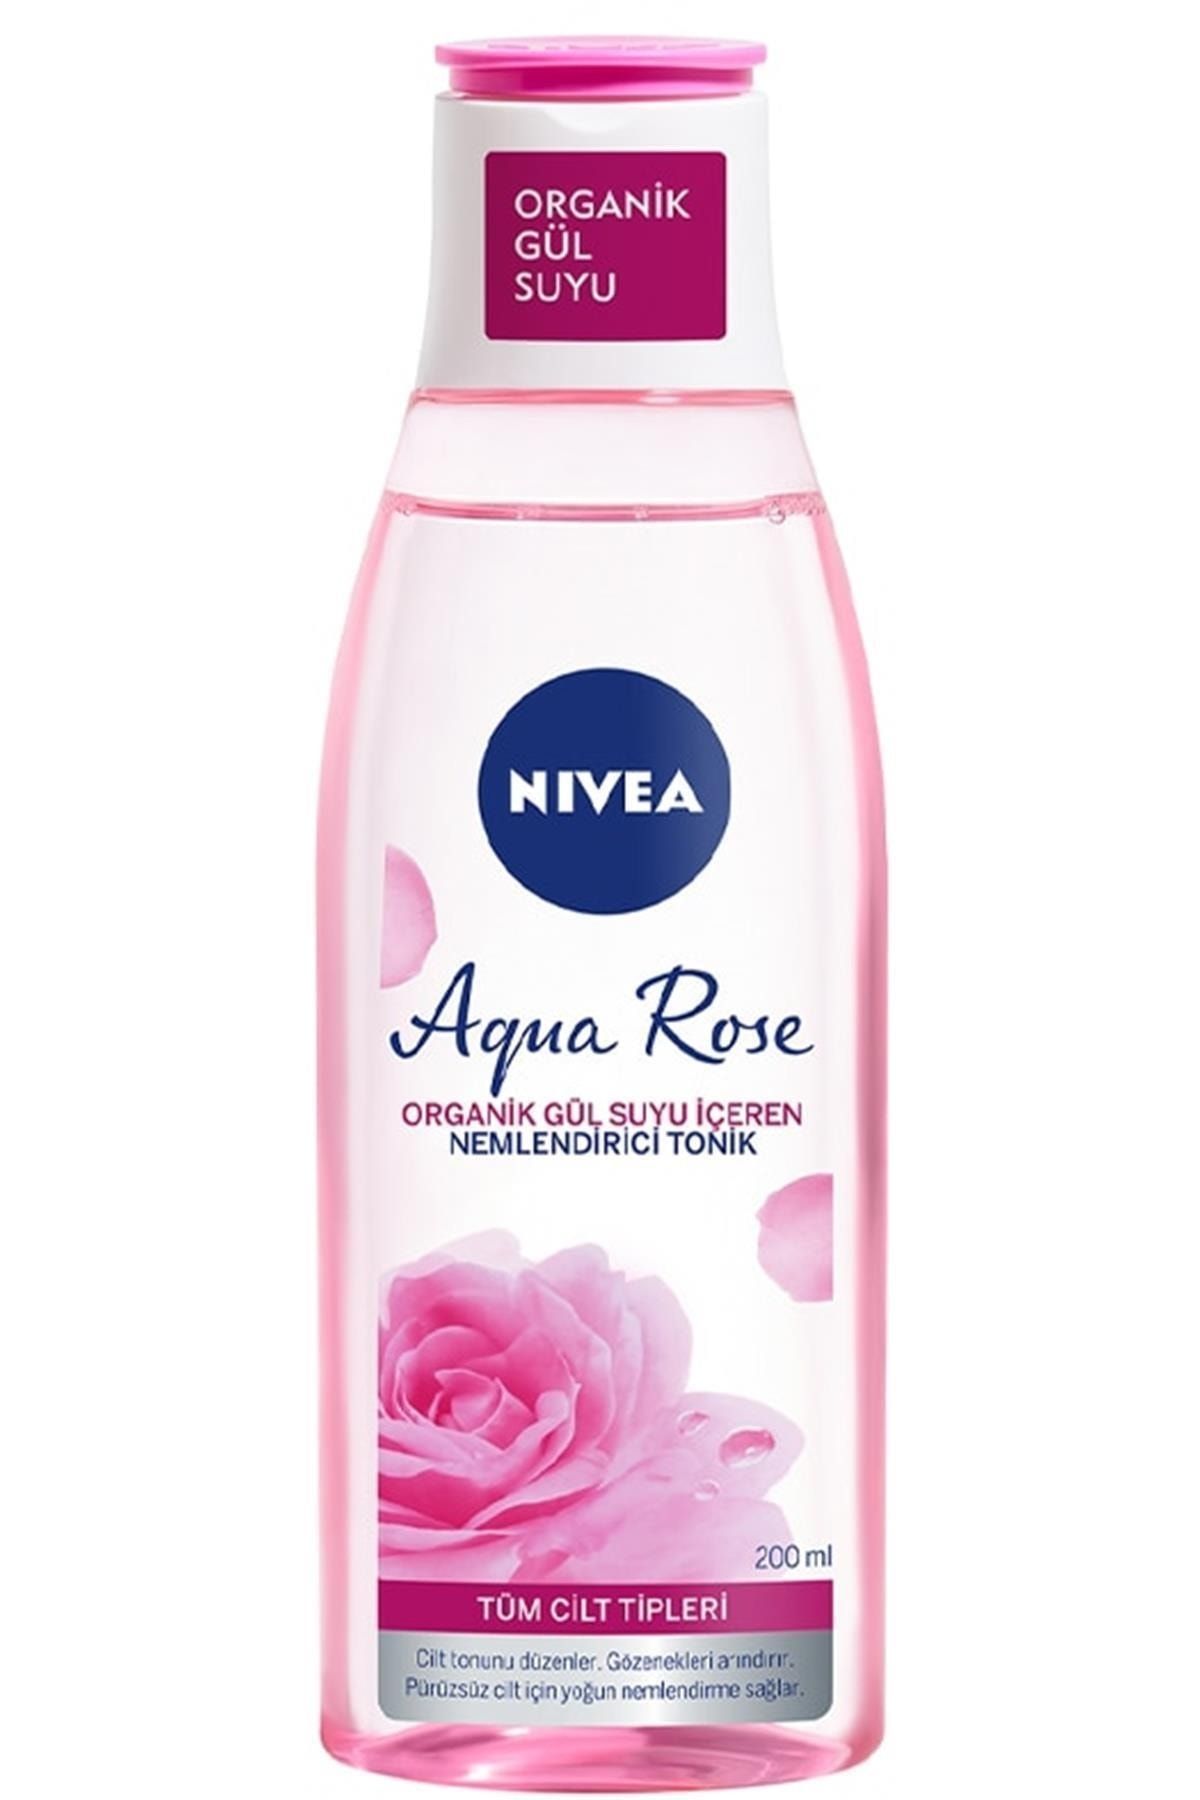 NIVEA Aqua Rose Organik Gül Suyu Içeren Tonik 200 Ml Kategori: Tonik